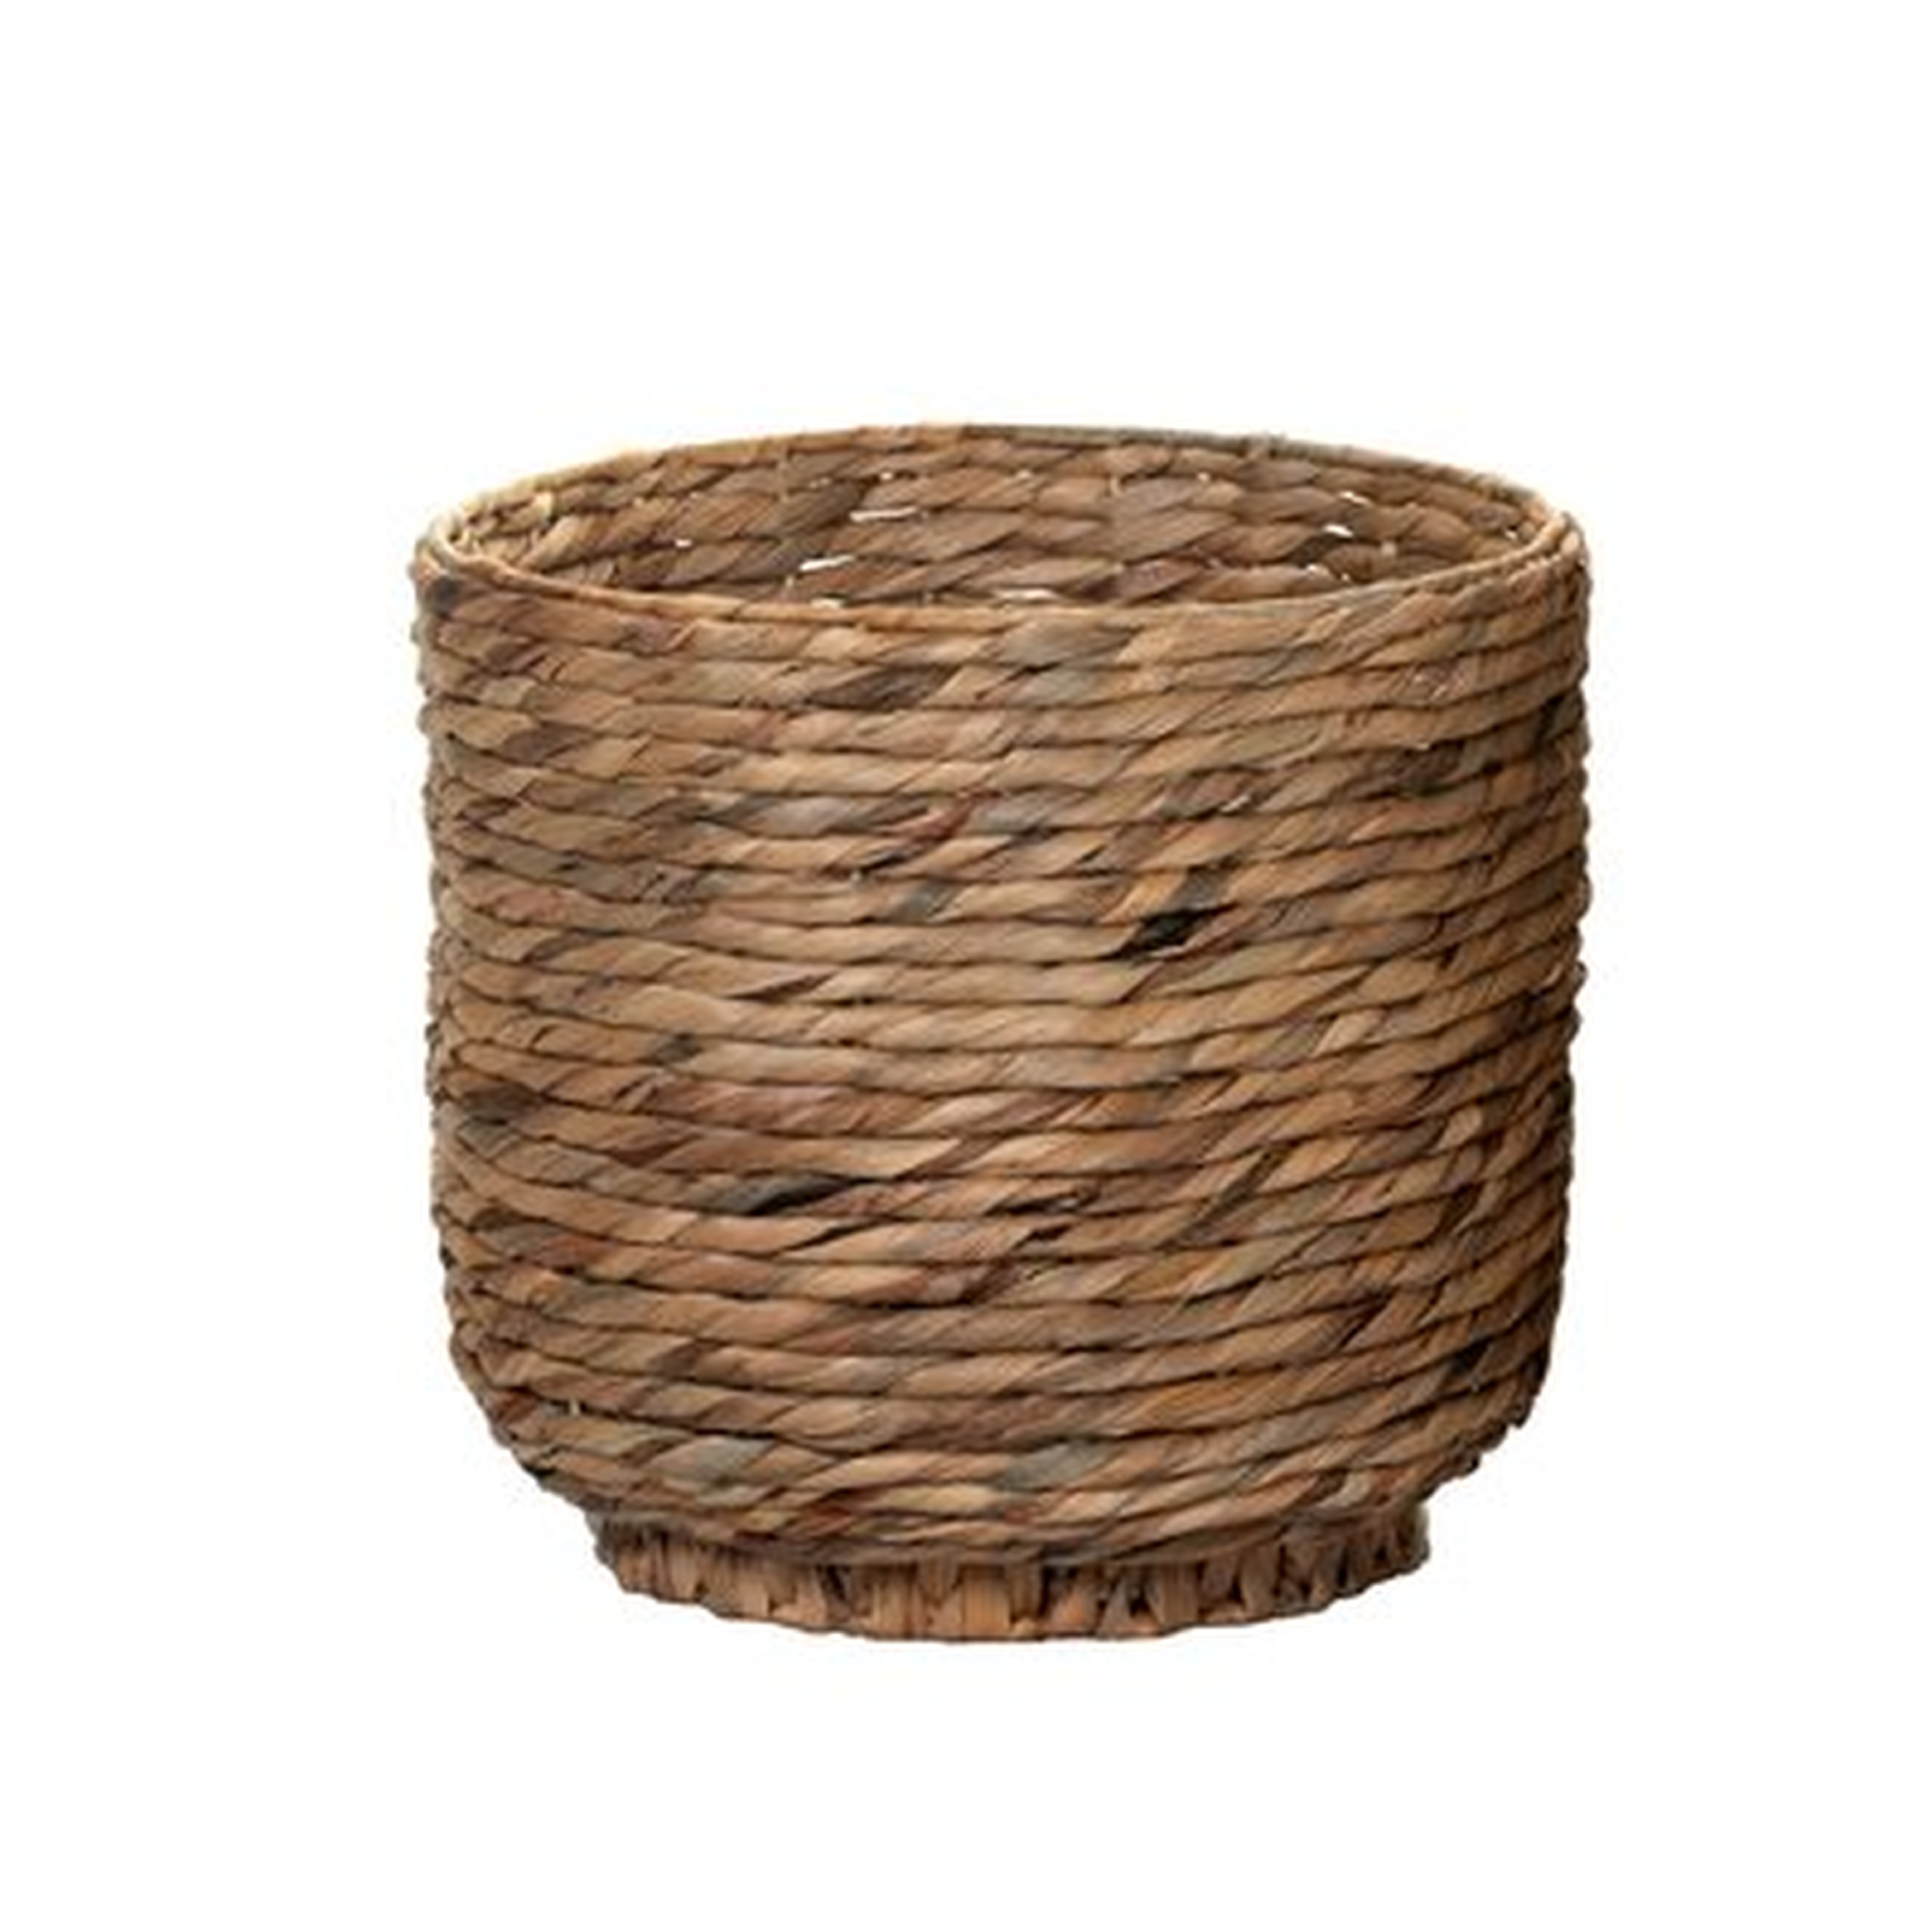 Twist Weave Water Hyacinth Wicker Basket - Wayfair